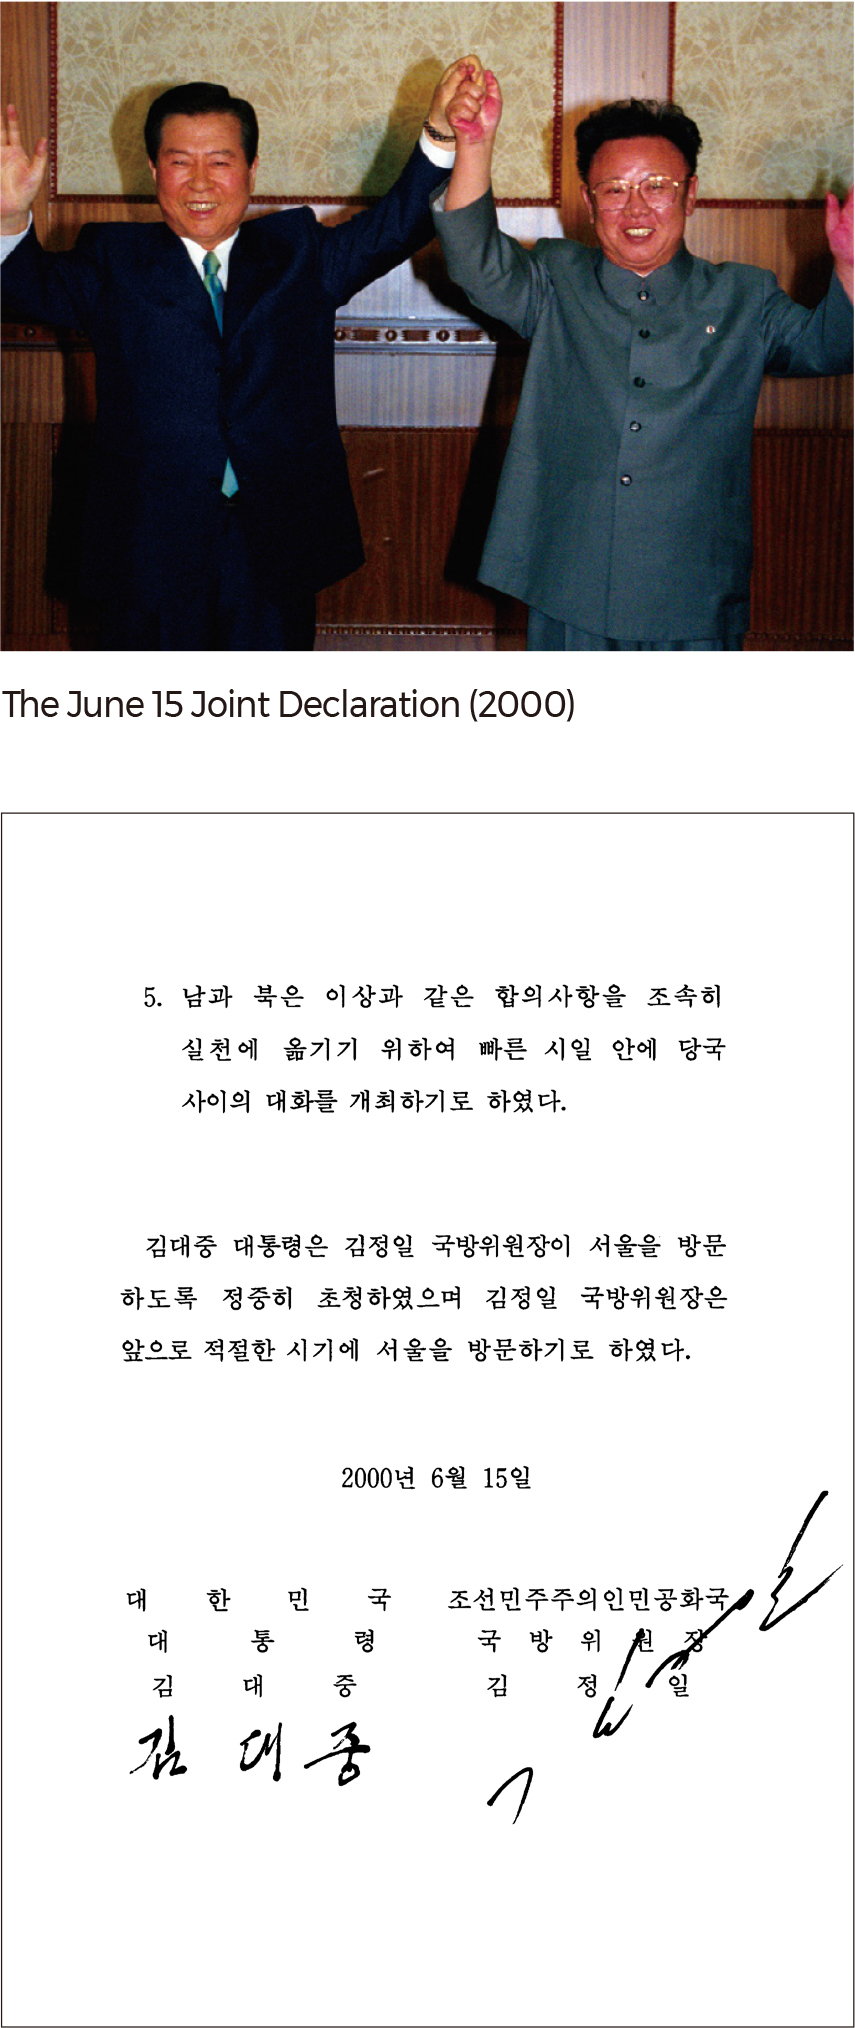 The June 15 Joint Declaration (2000)